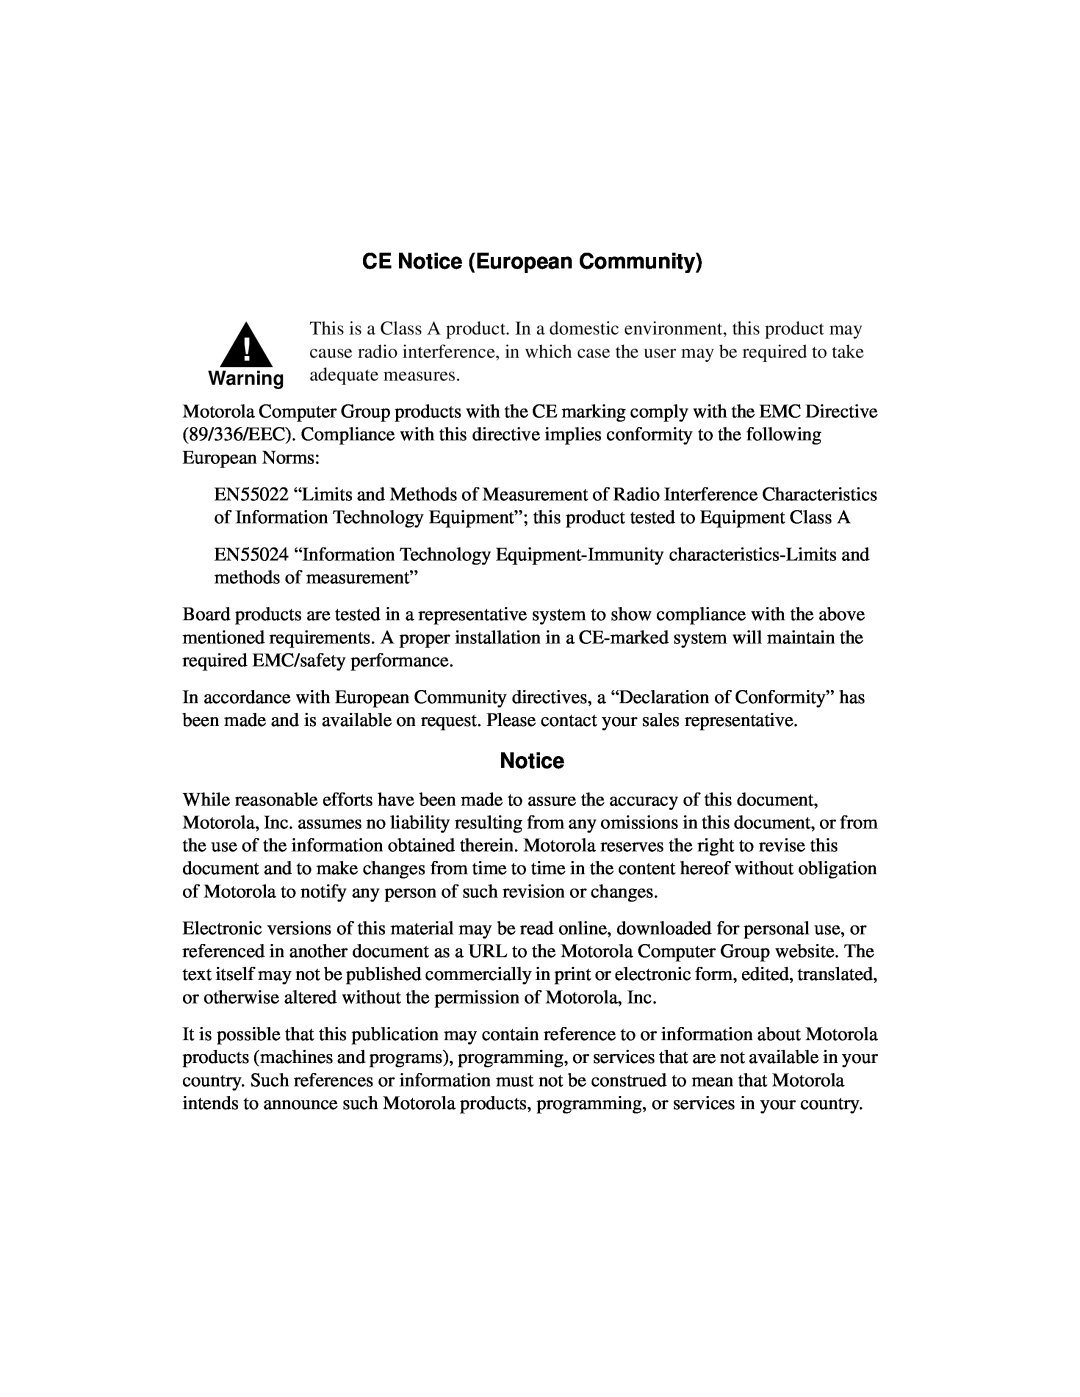 Motorola IH5, MCPN750A manual CE Notice European Community 